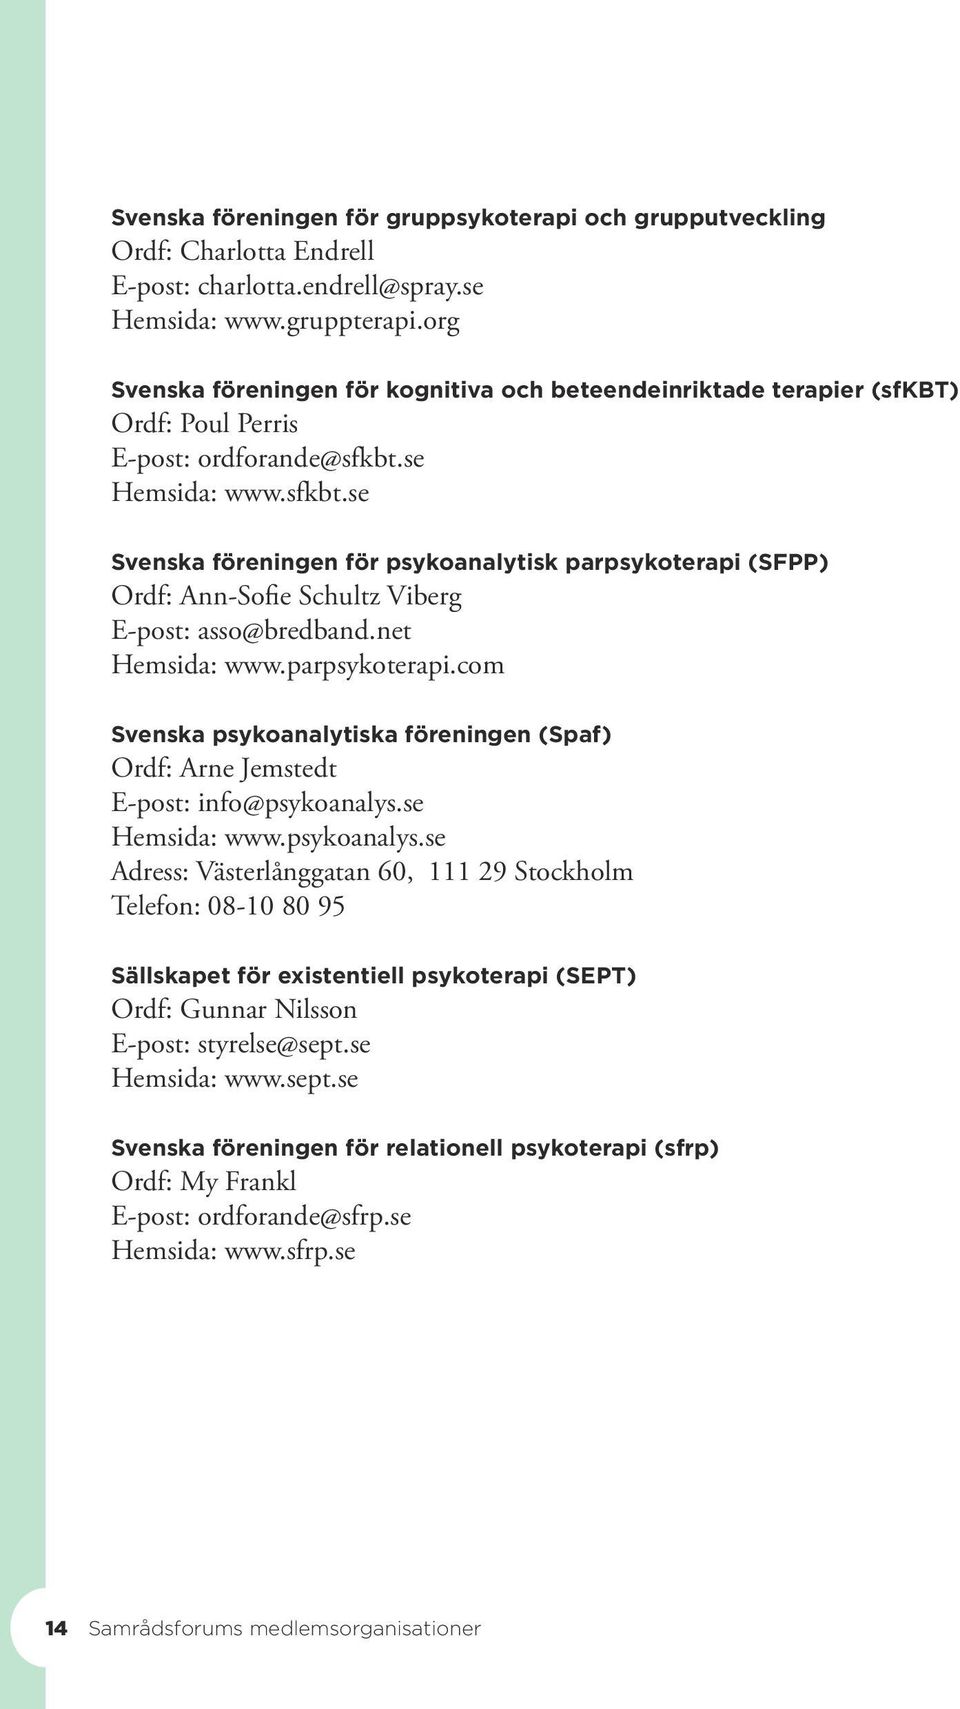 net Hemsida: www.parpsykoterapi.com Svenska psykoanalytiska föreningen (Spaf) Ordf: Arne Jemstedt E-post: info@psykoanalys.